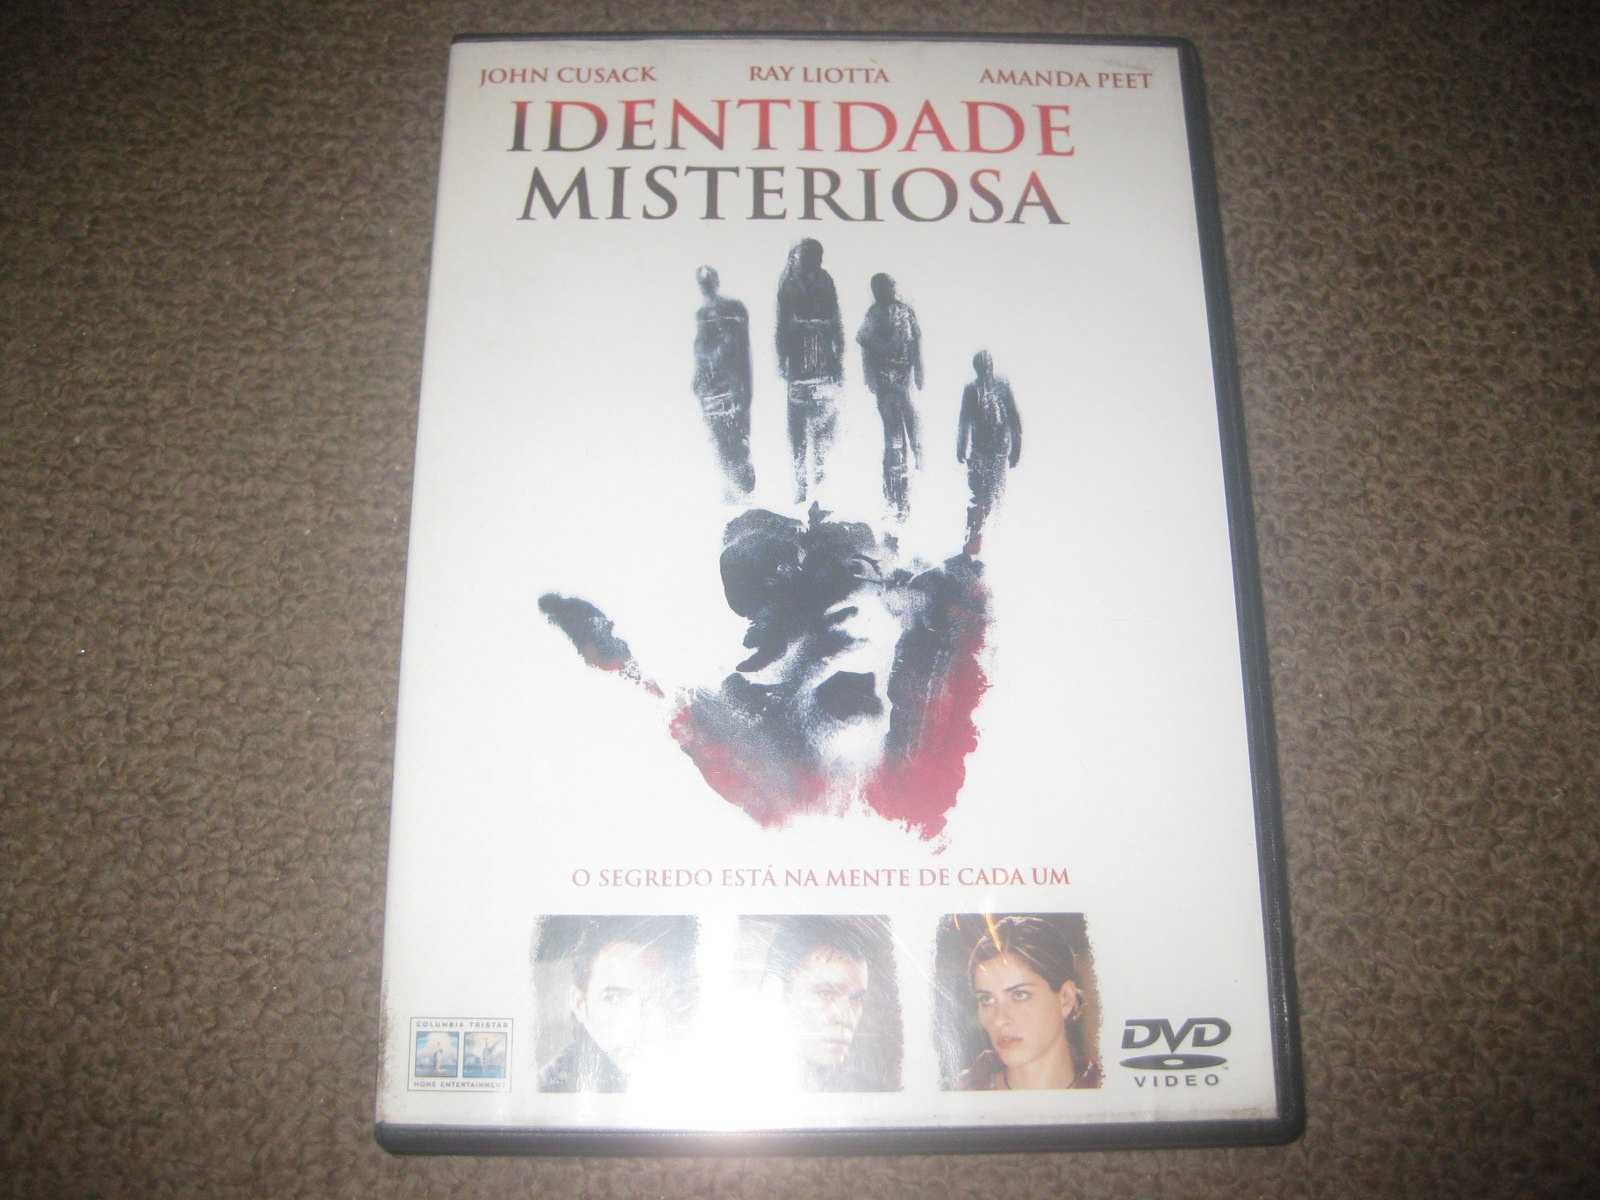 DVD "Identidade Misteriosa" com John Cusack